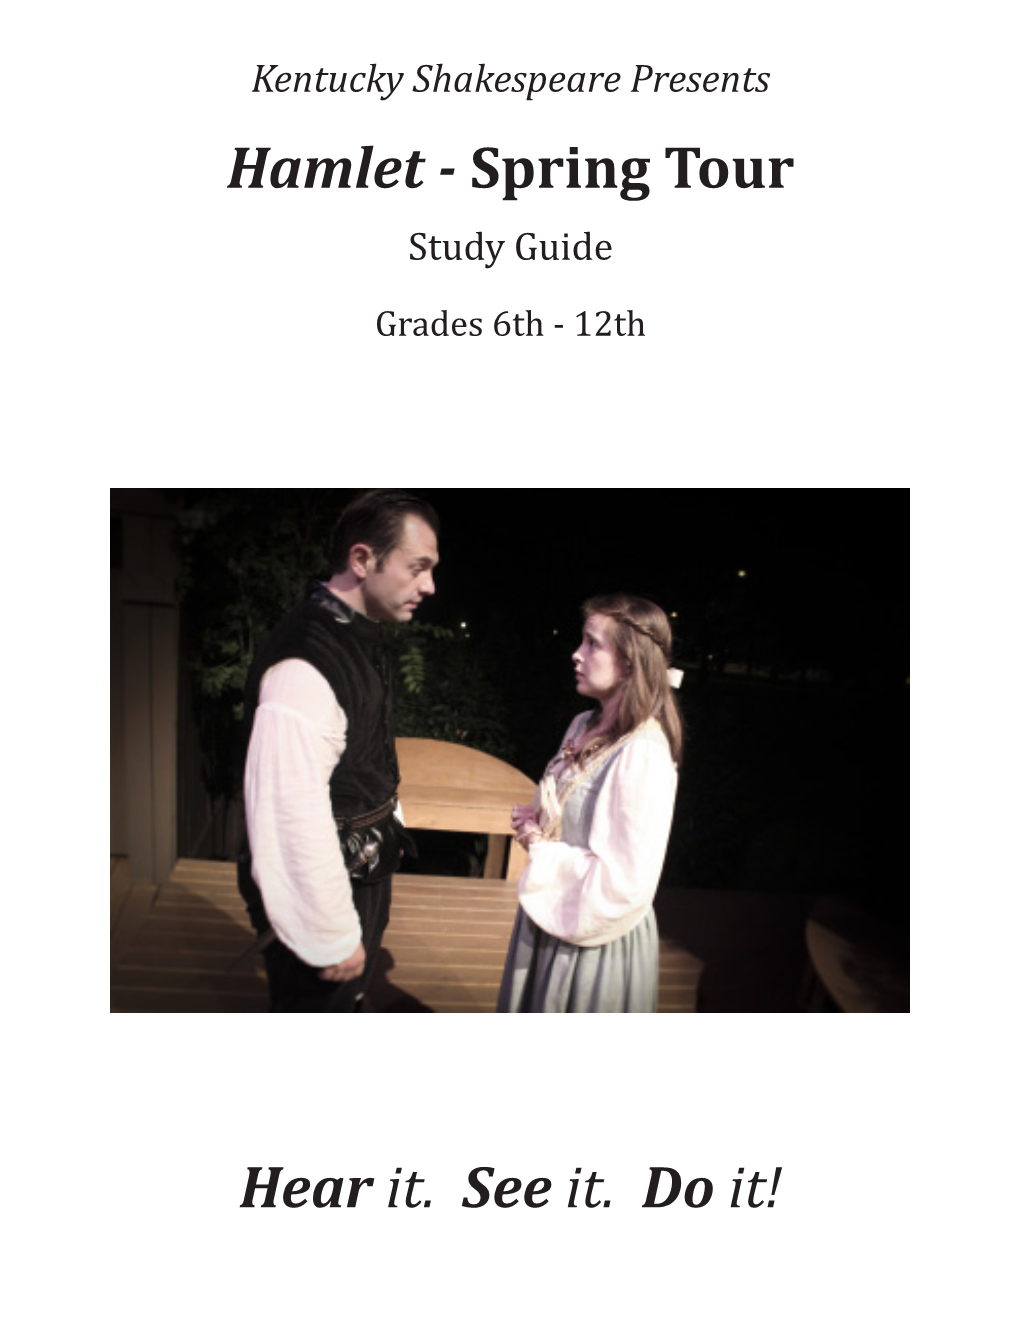 Hamlet - Spring Tour Study Guide